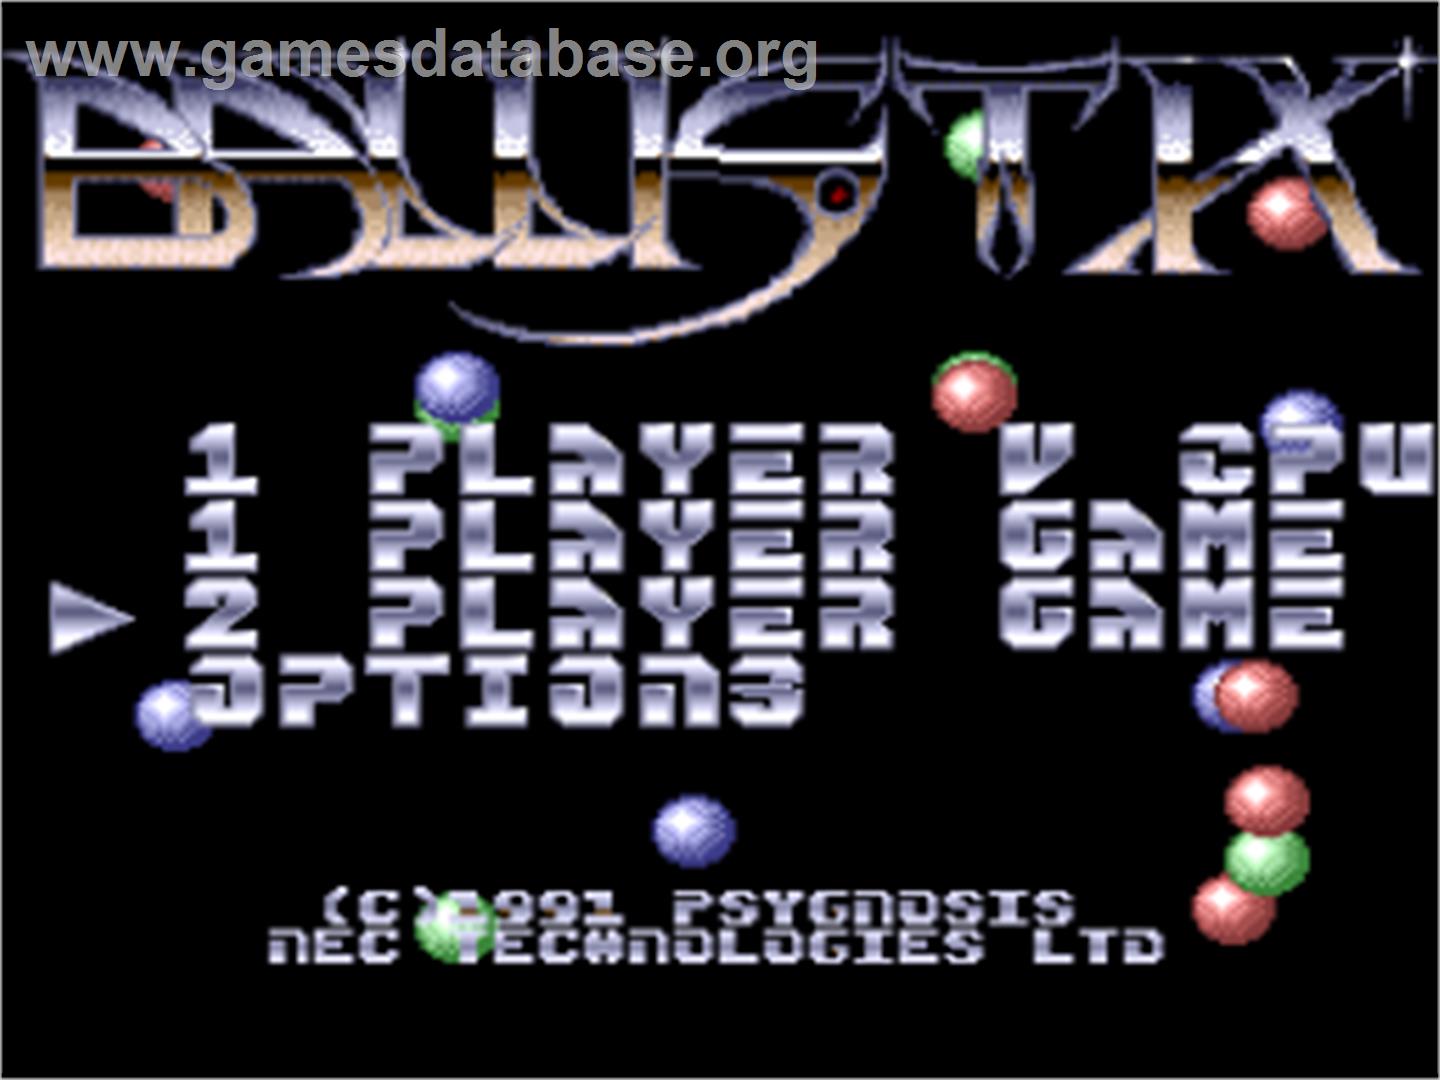 Ballistix - NEC TurboGrafx-16 - Artwork - Title Screen